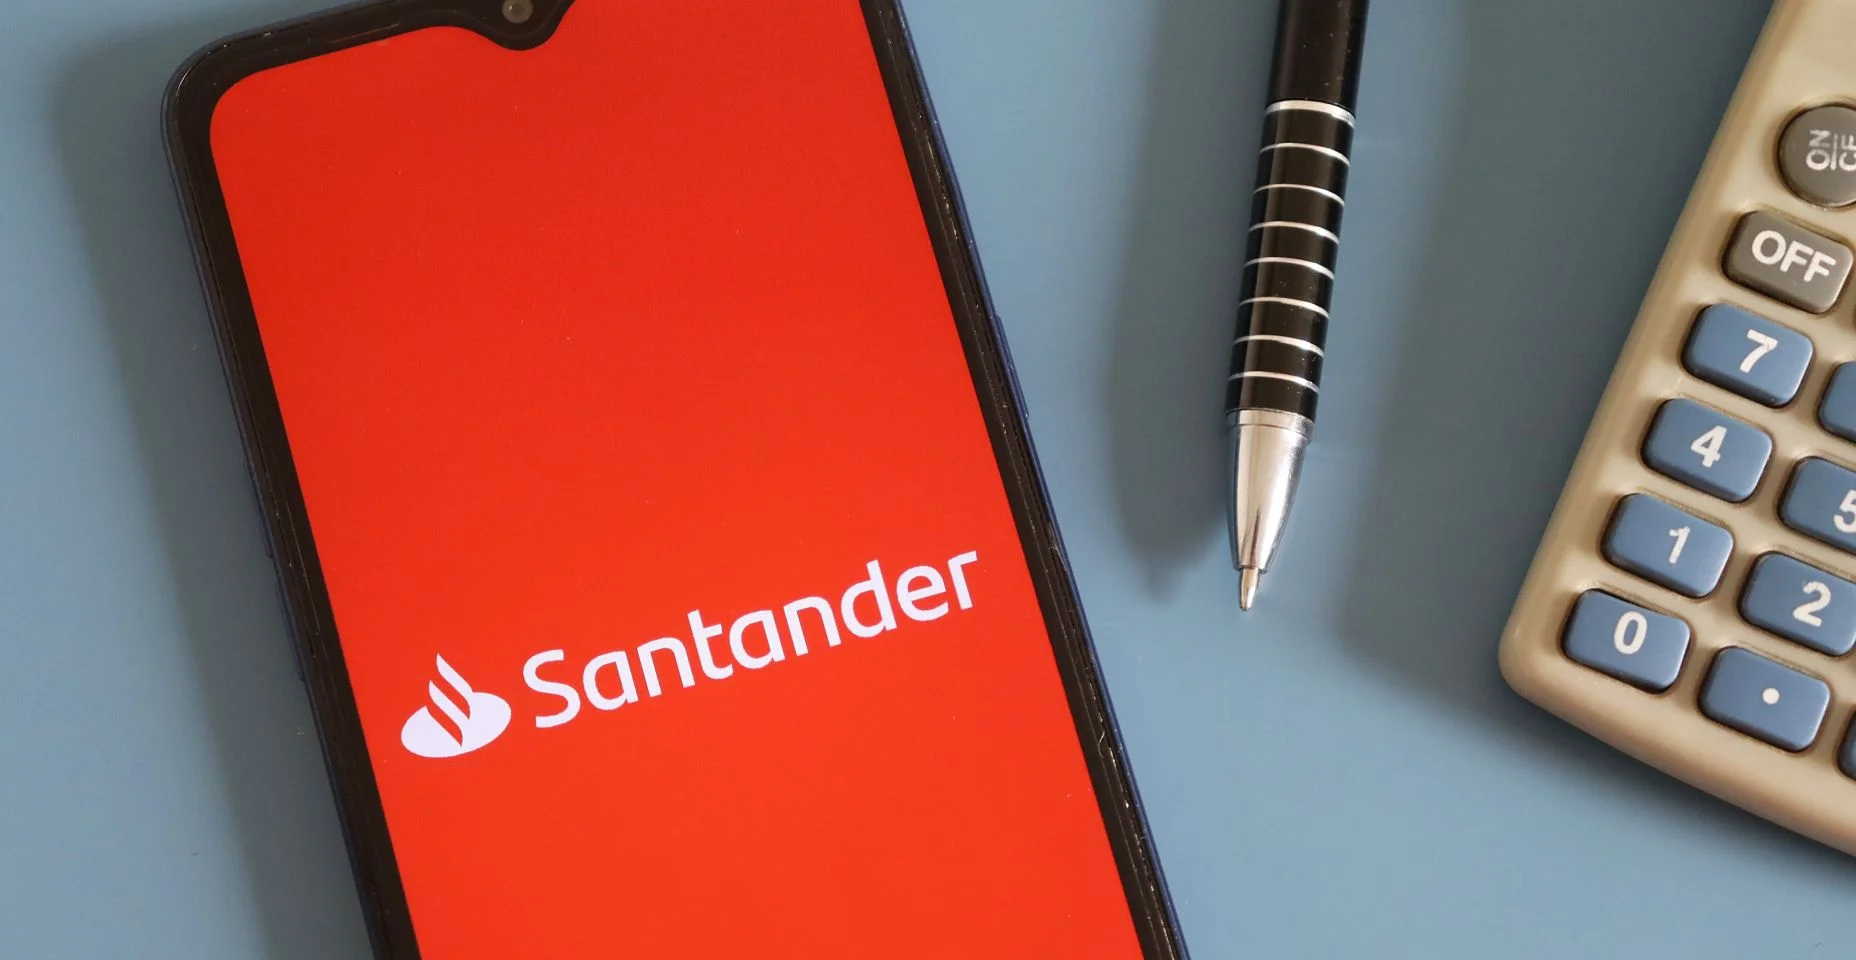 Logotipo do Banco Santander (Banco Santander) na tela do smartphone na mesa de escritório.